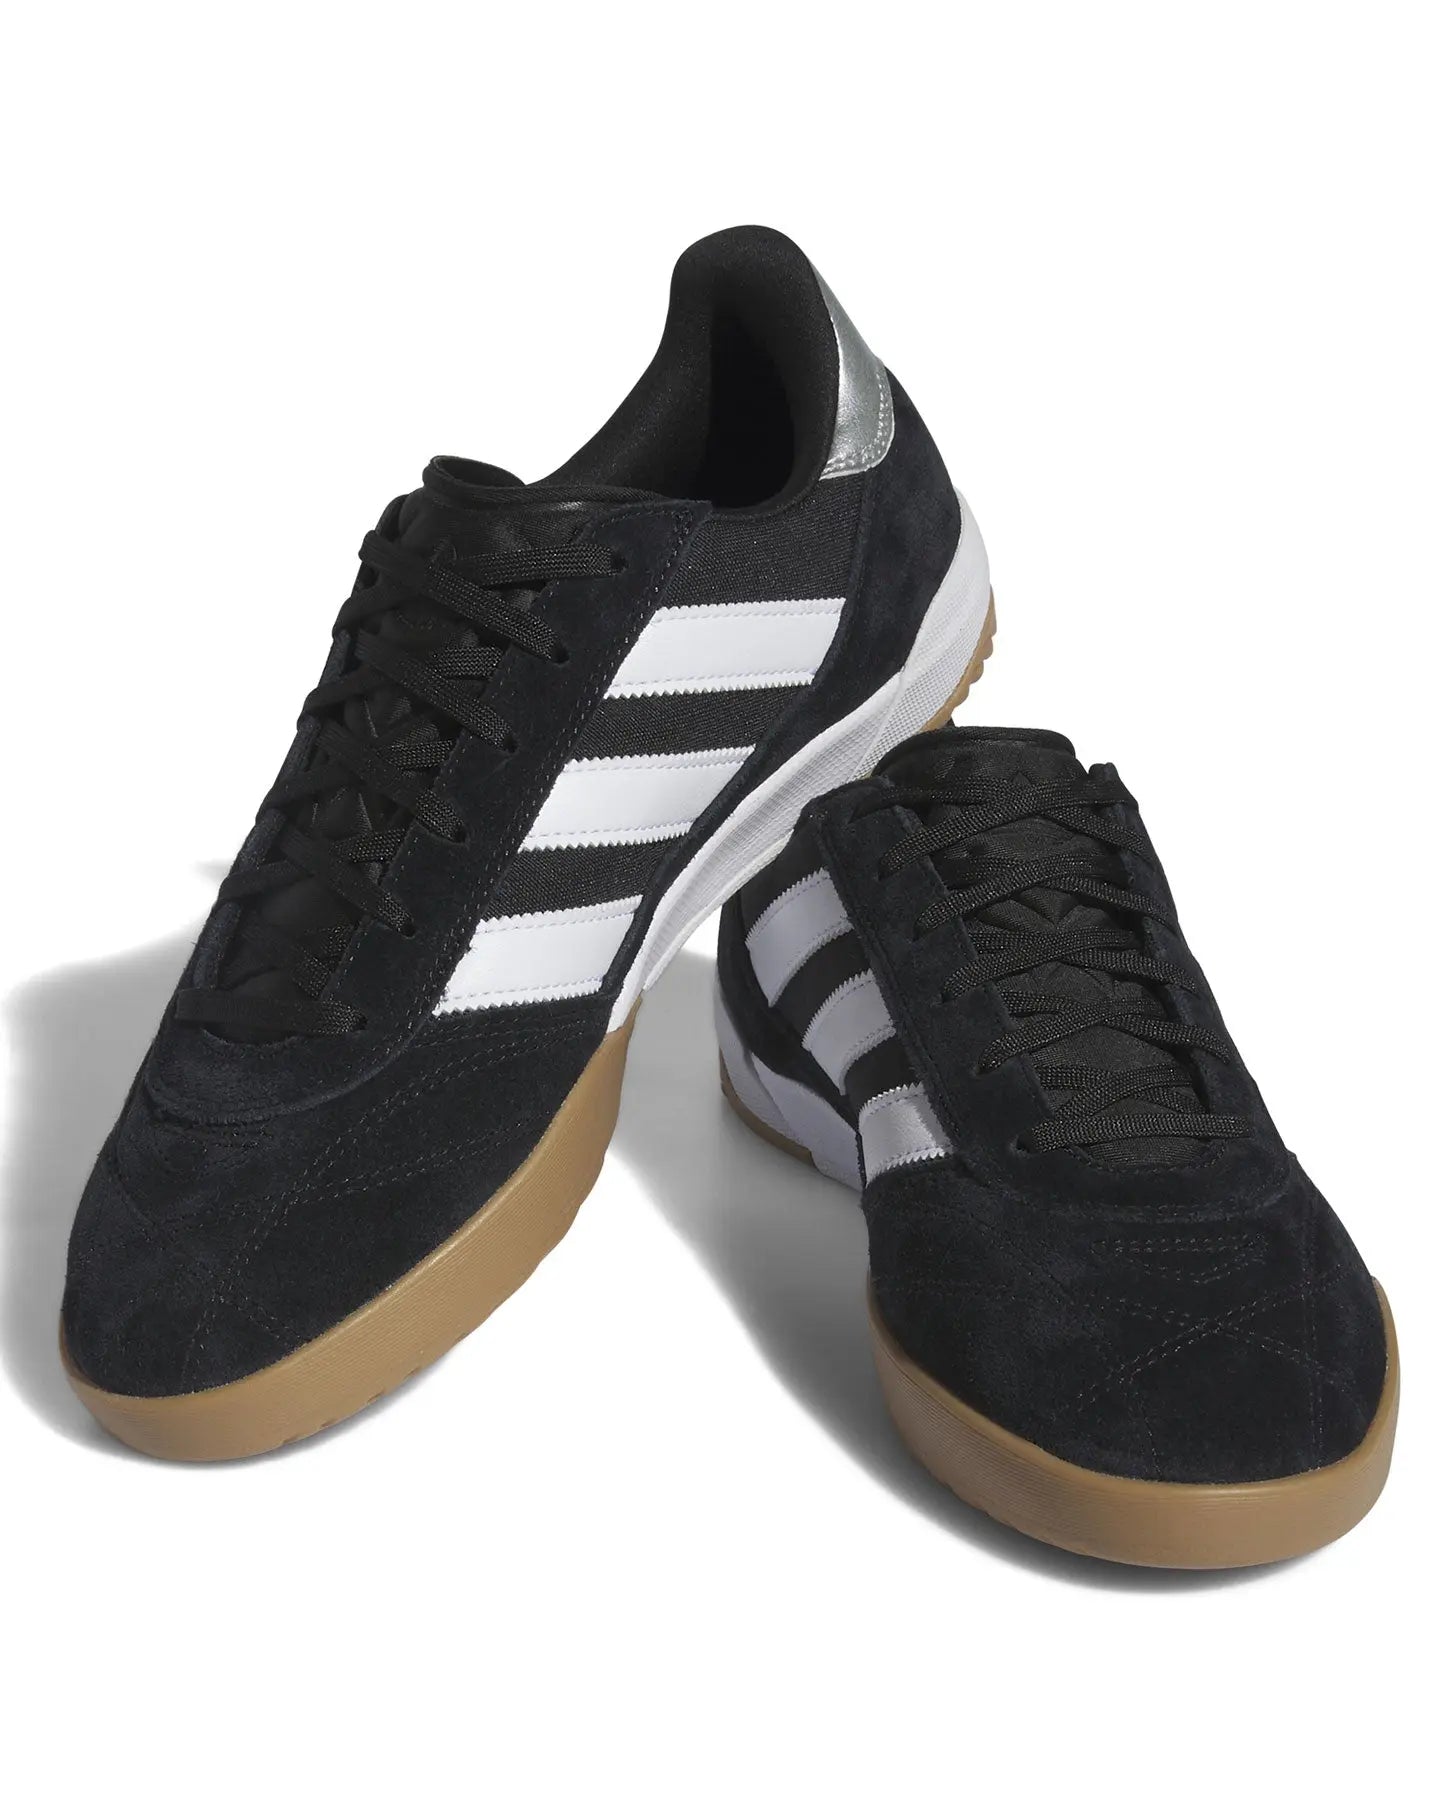 Adidas Copa Premiere - Black / White / Gum Footwear